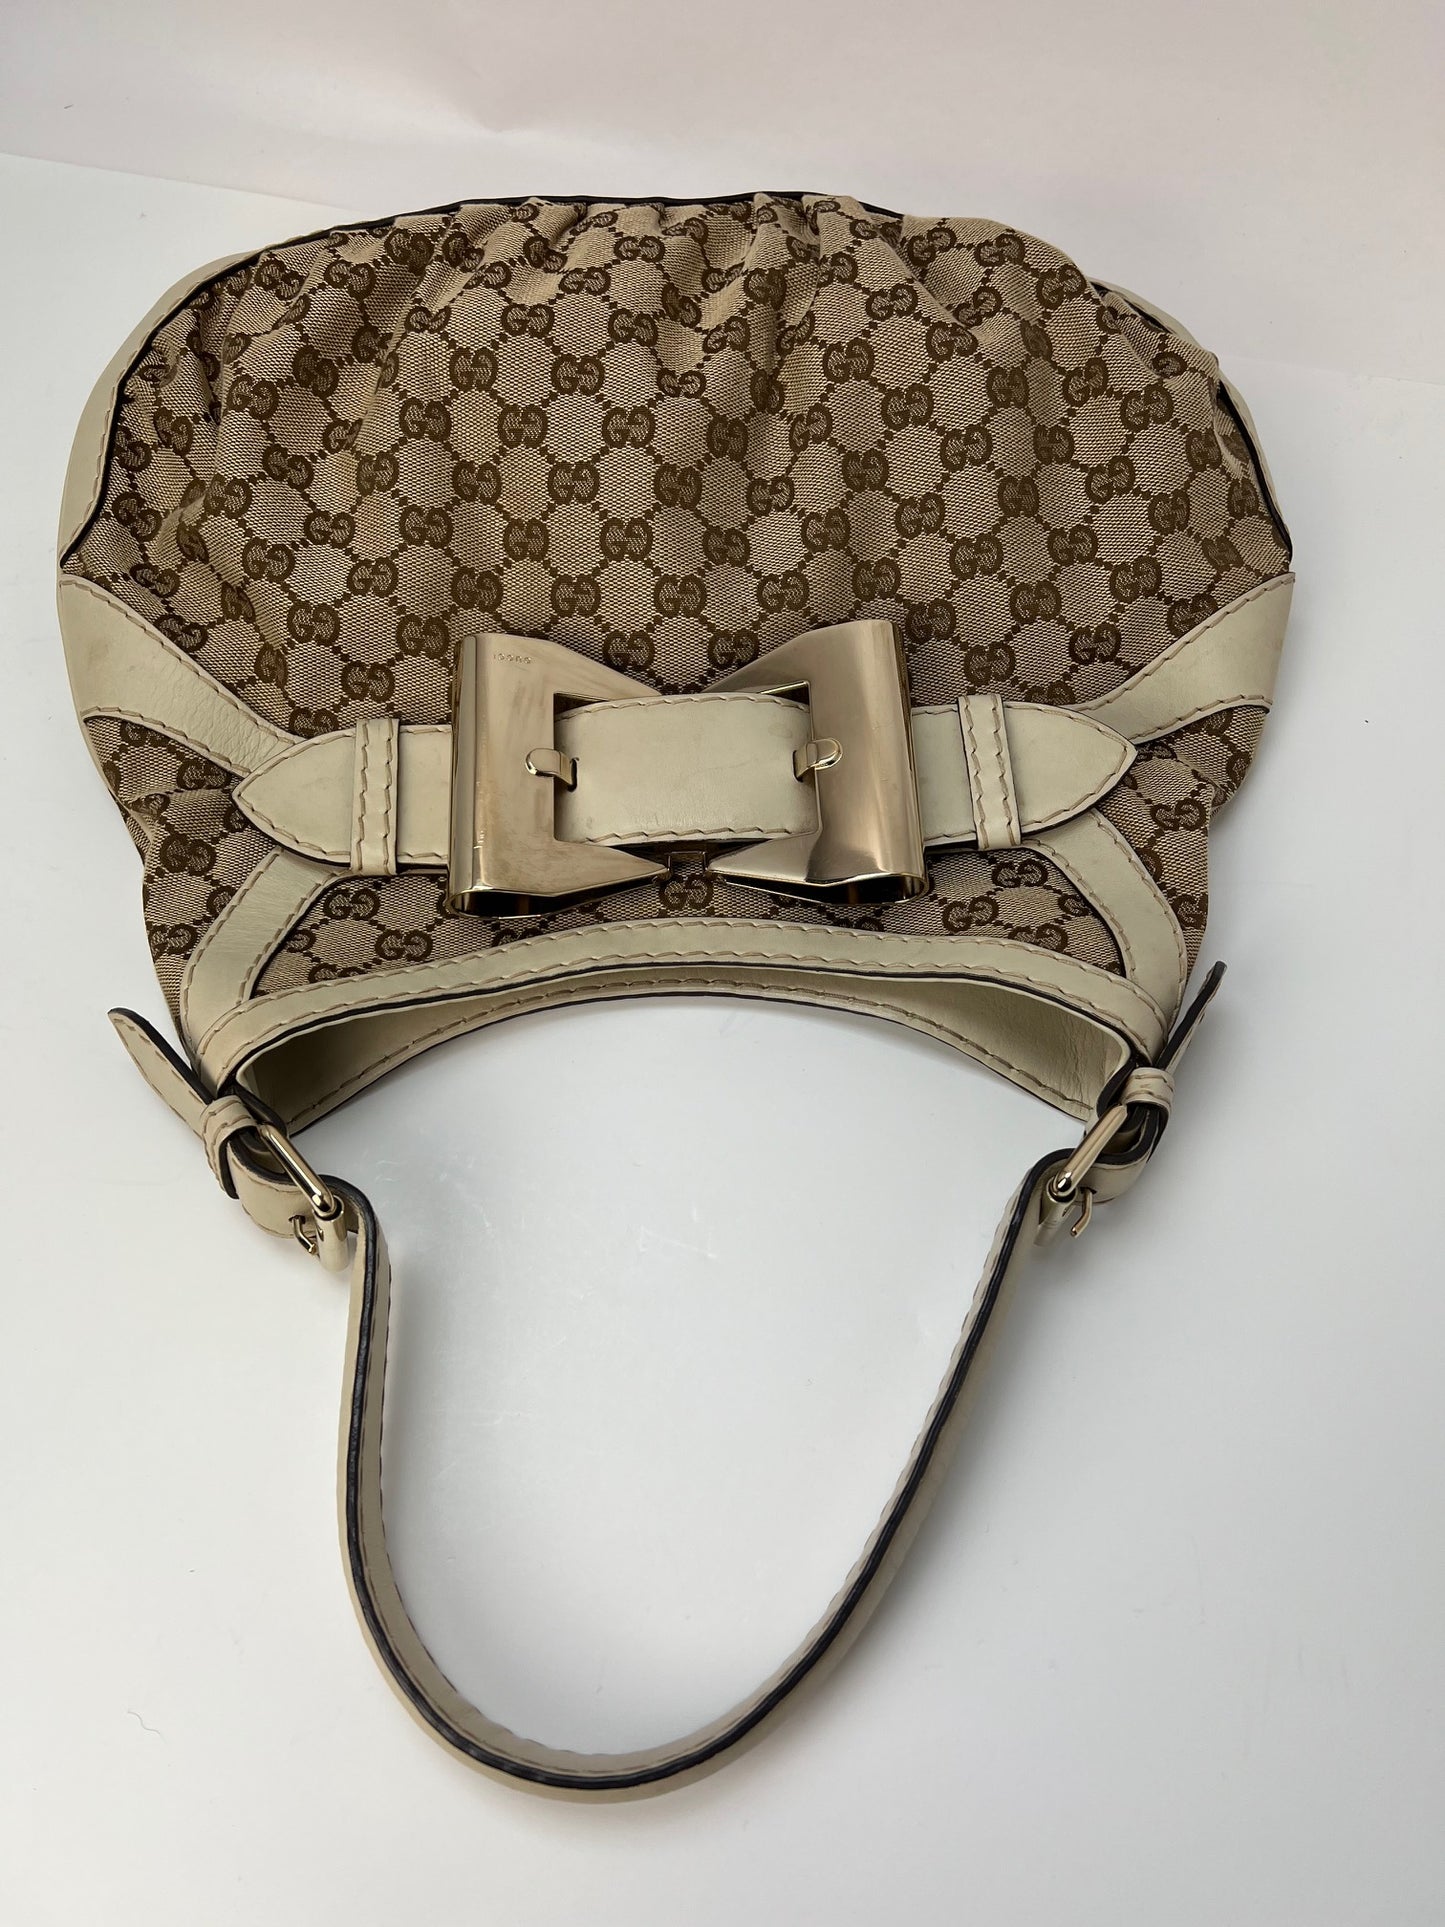 Gucci Monogram GG Queen Hobo Bag